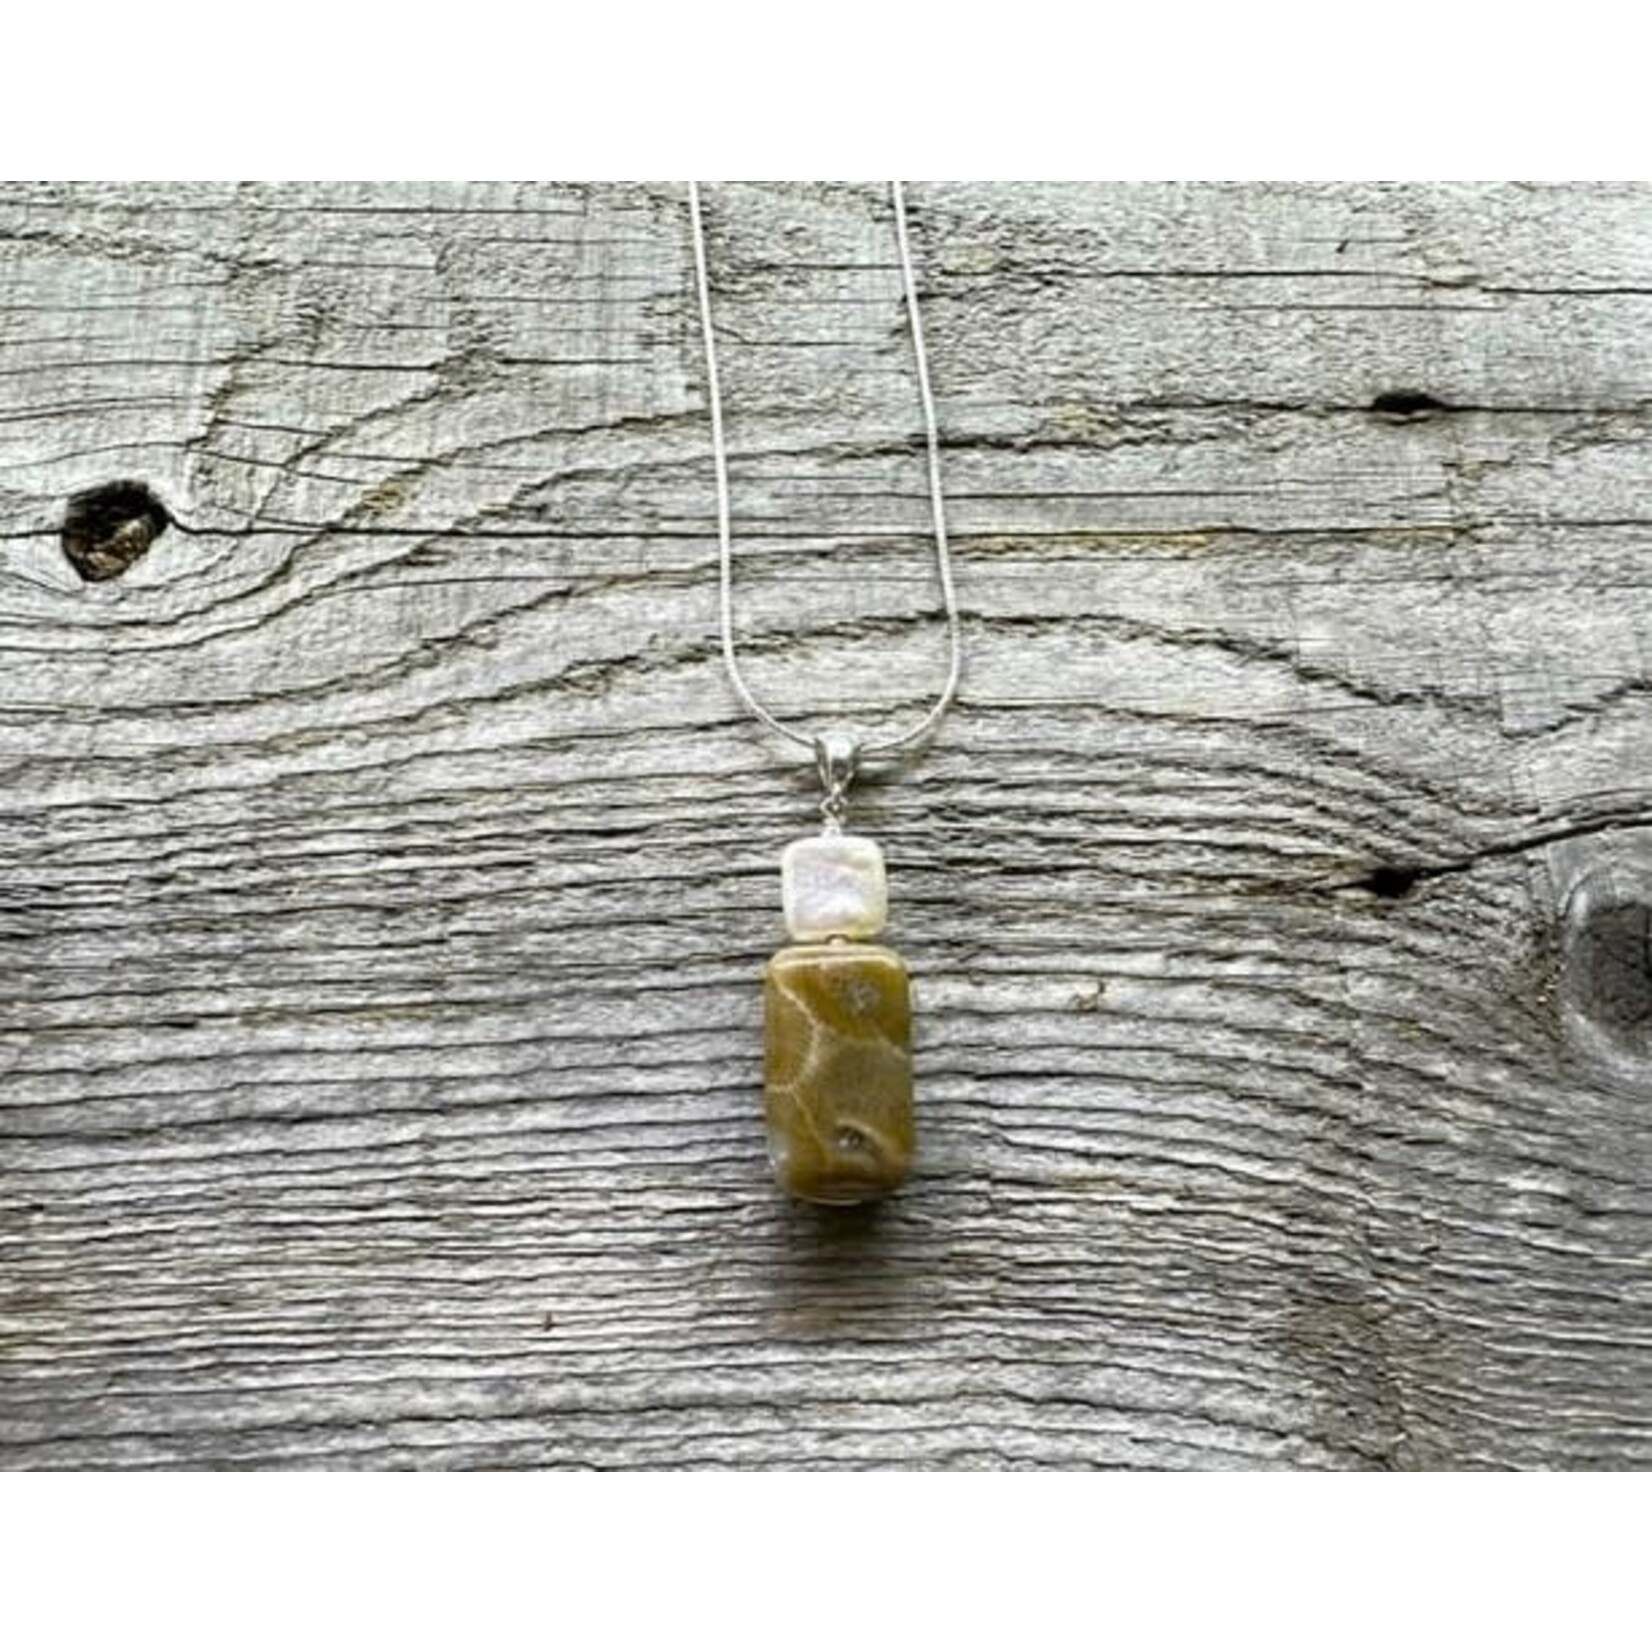 Necklace Pendant - Petoskey Stone & Freshwater Pearl